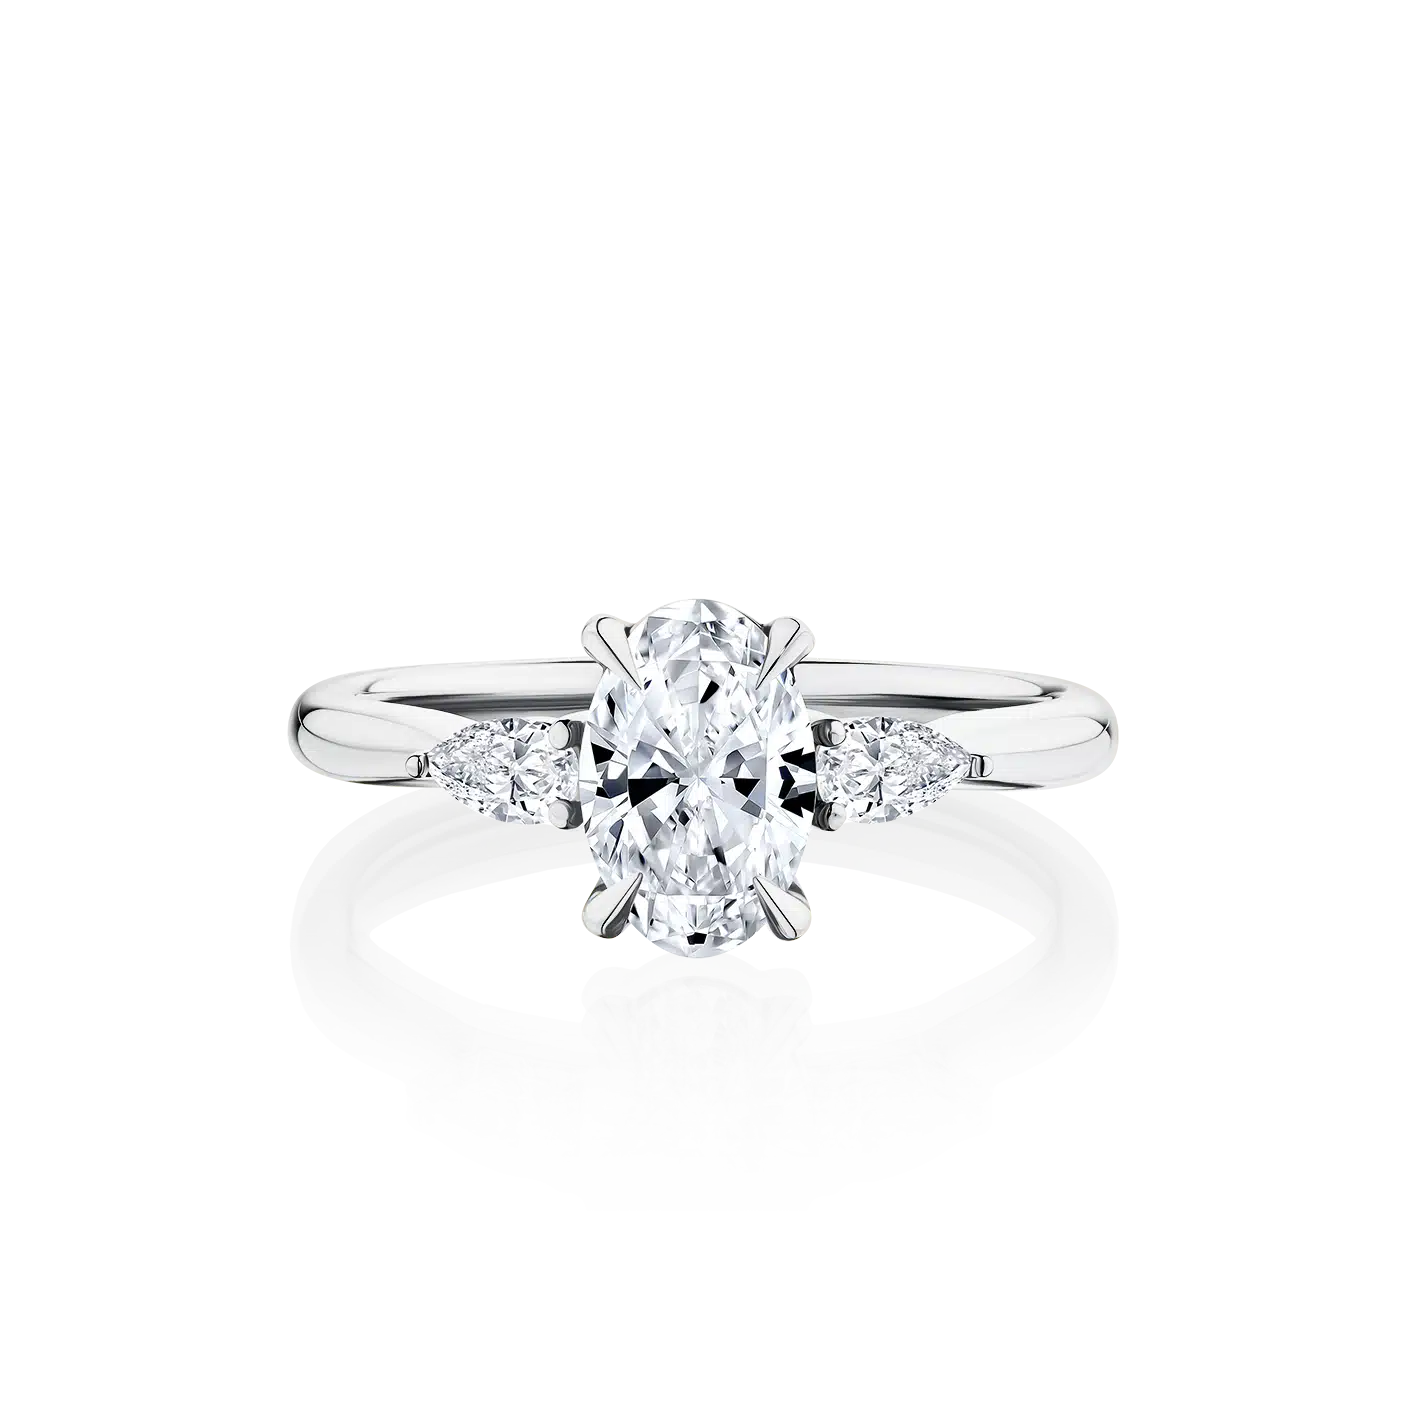 Cyathea-Oval-Cut-White-Gold-Trilogy-Diamond-Engagement-Ring